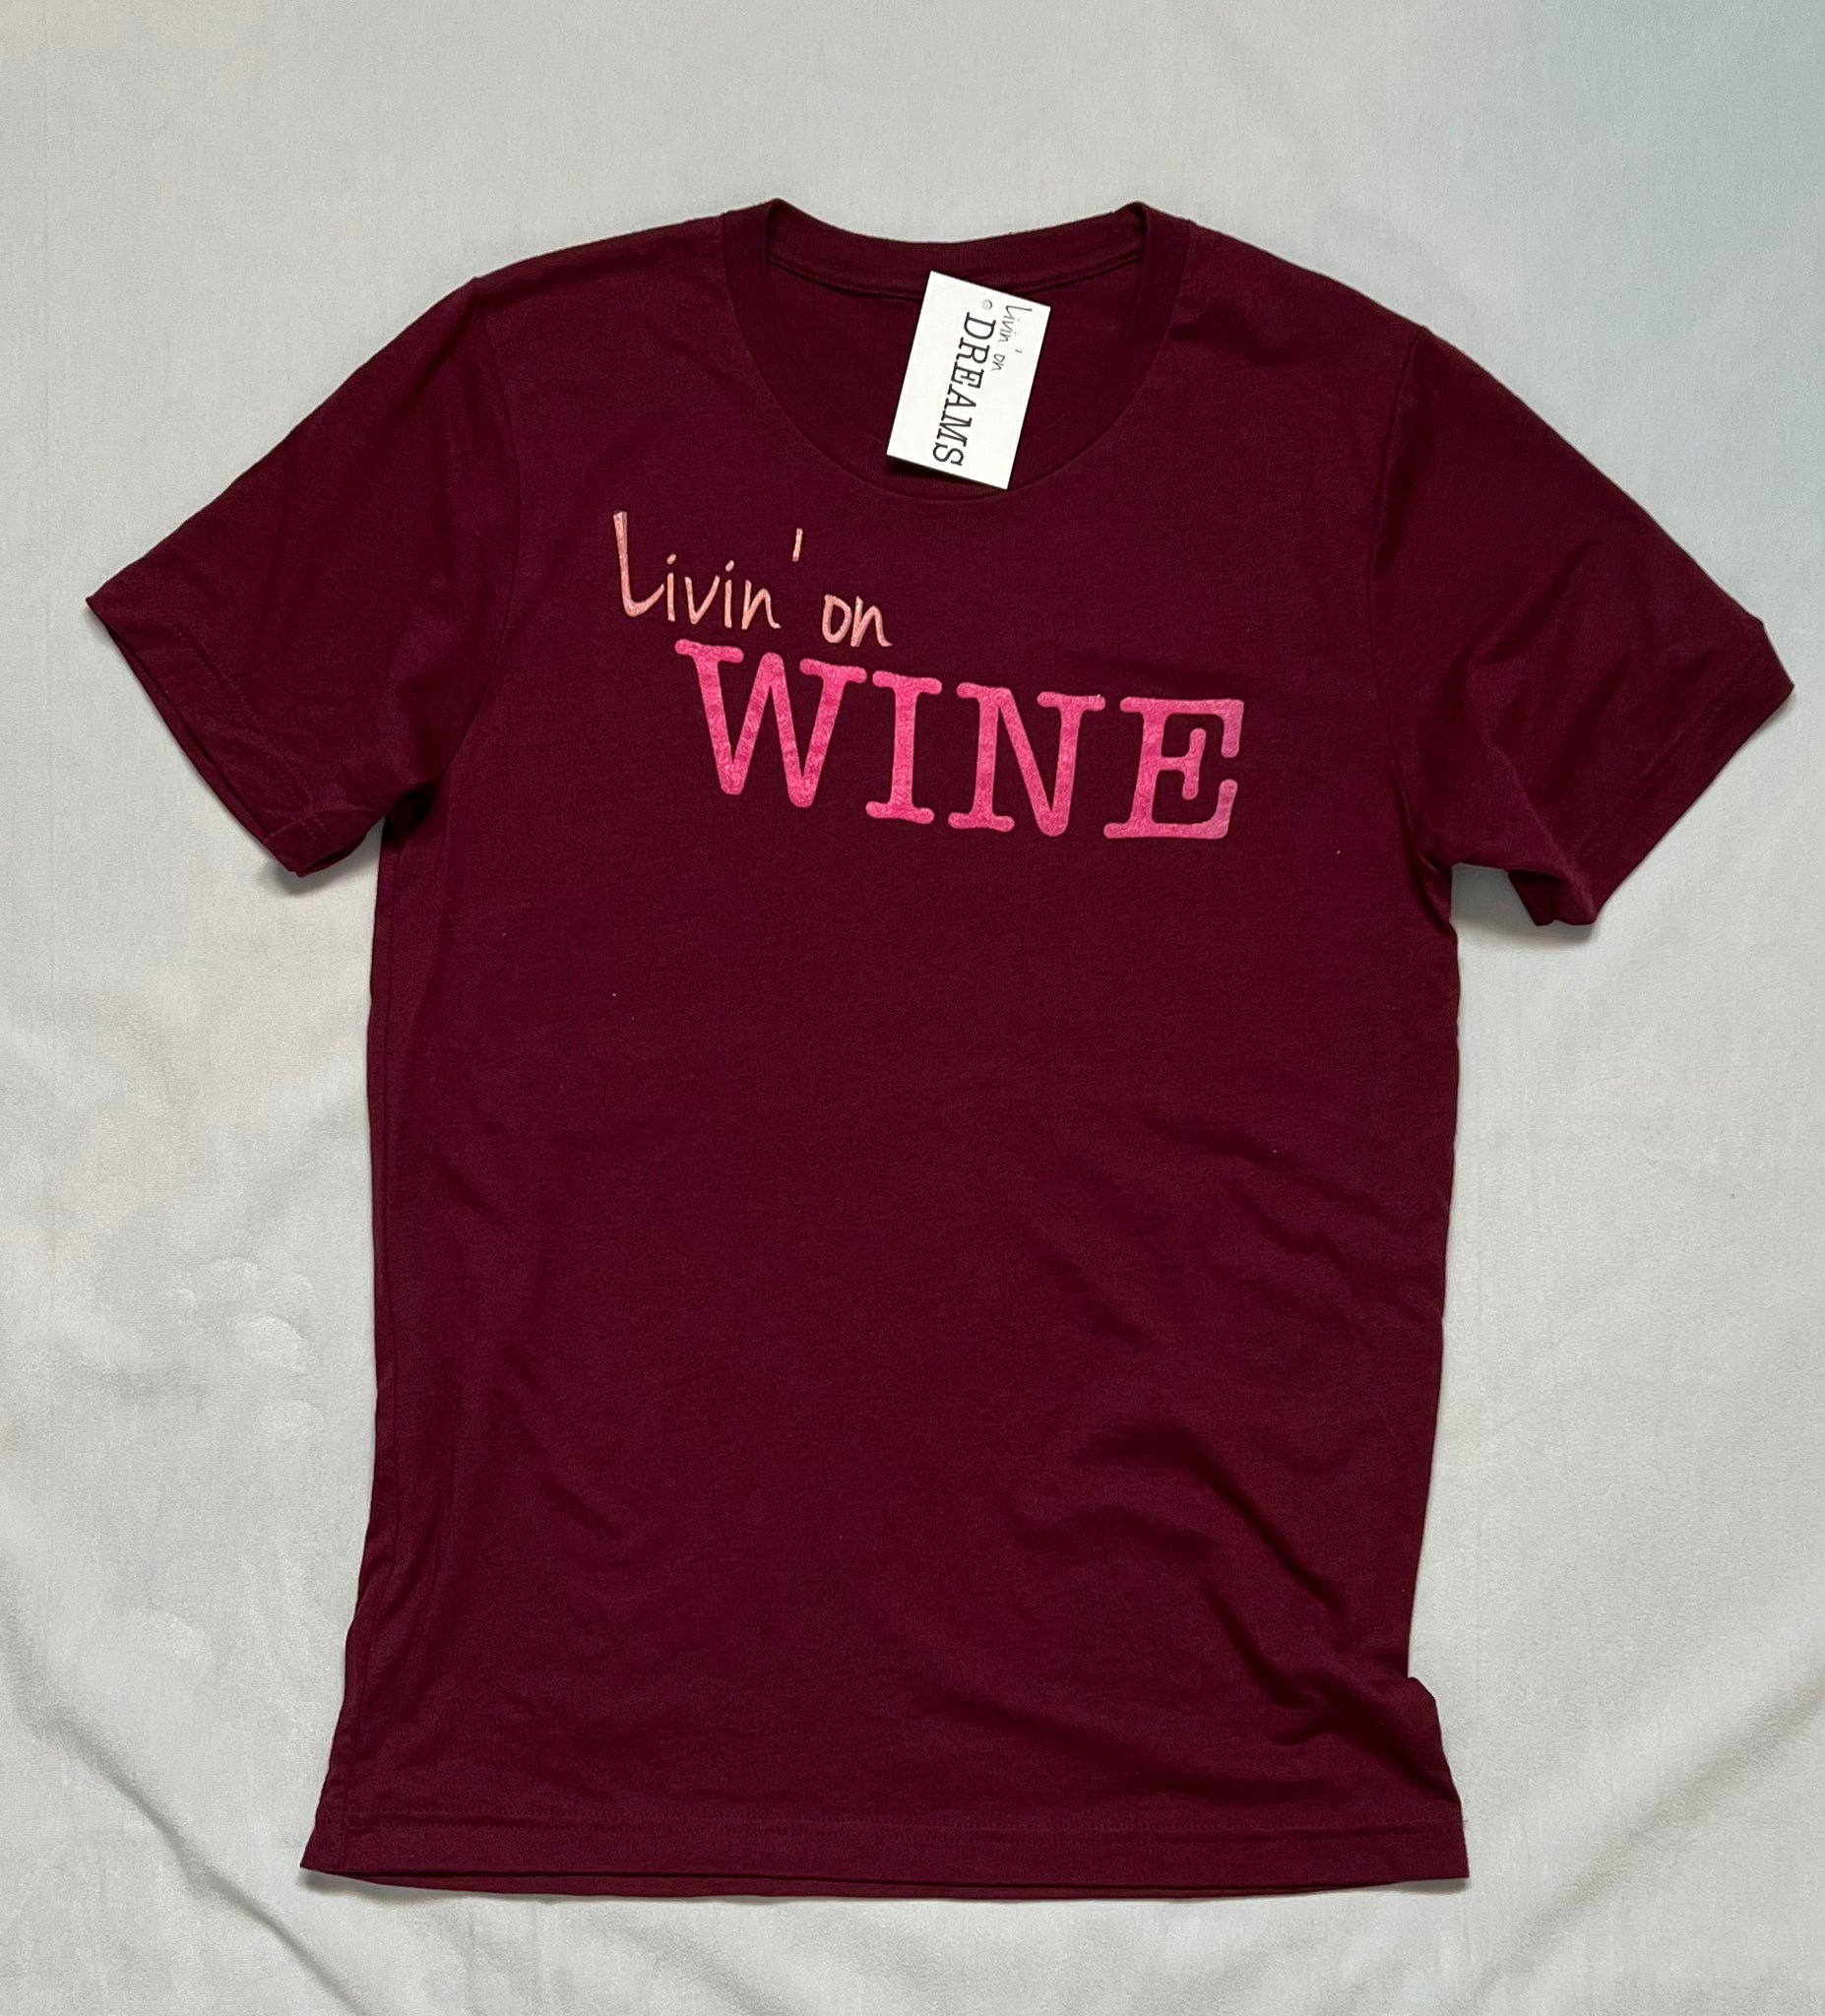 Livin' on WINE T-shirt